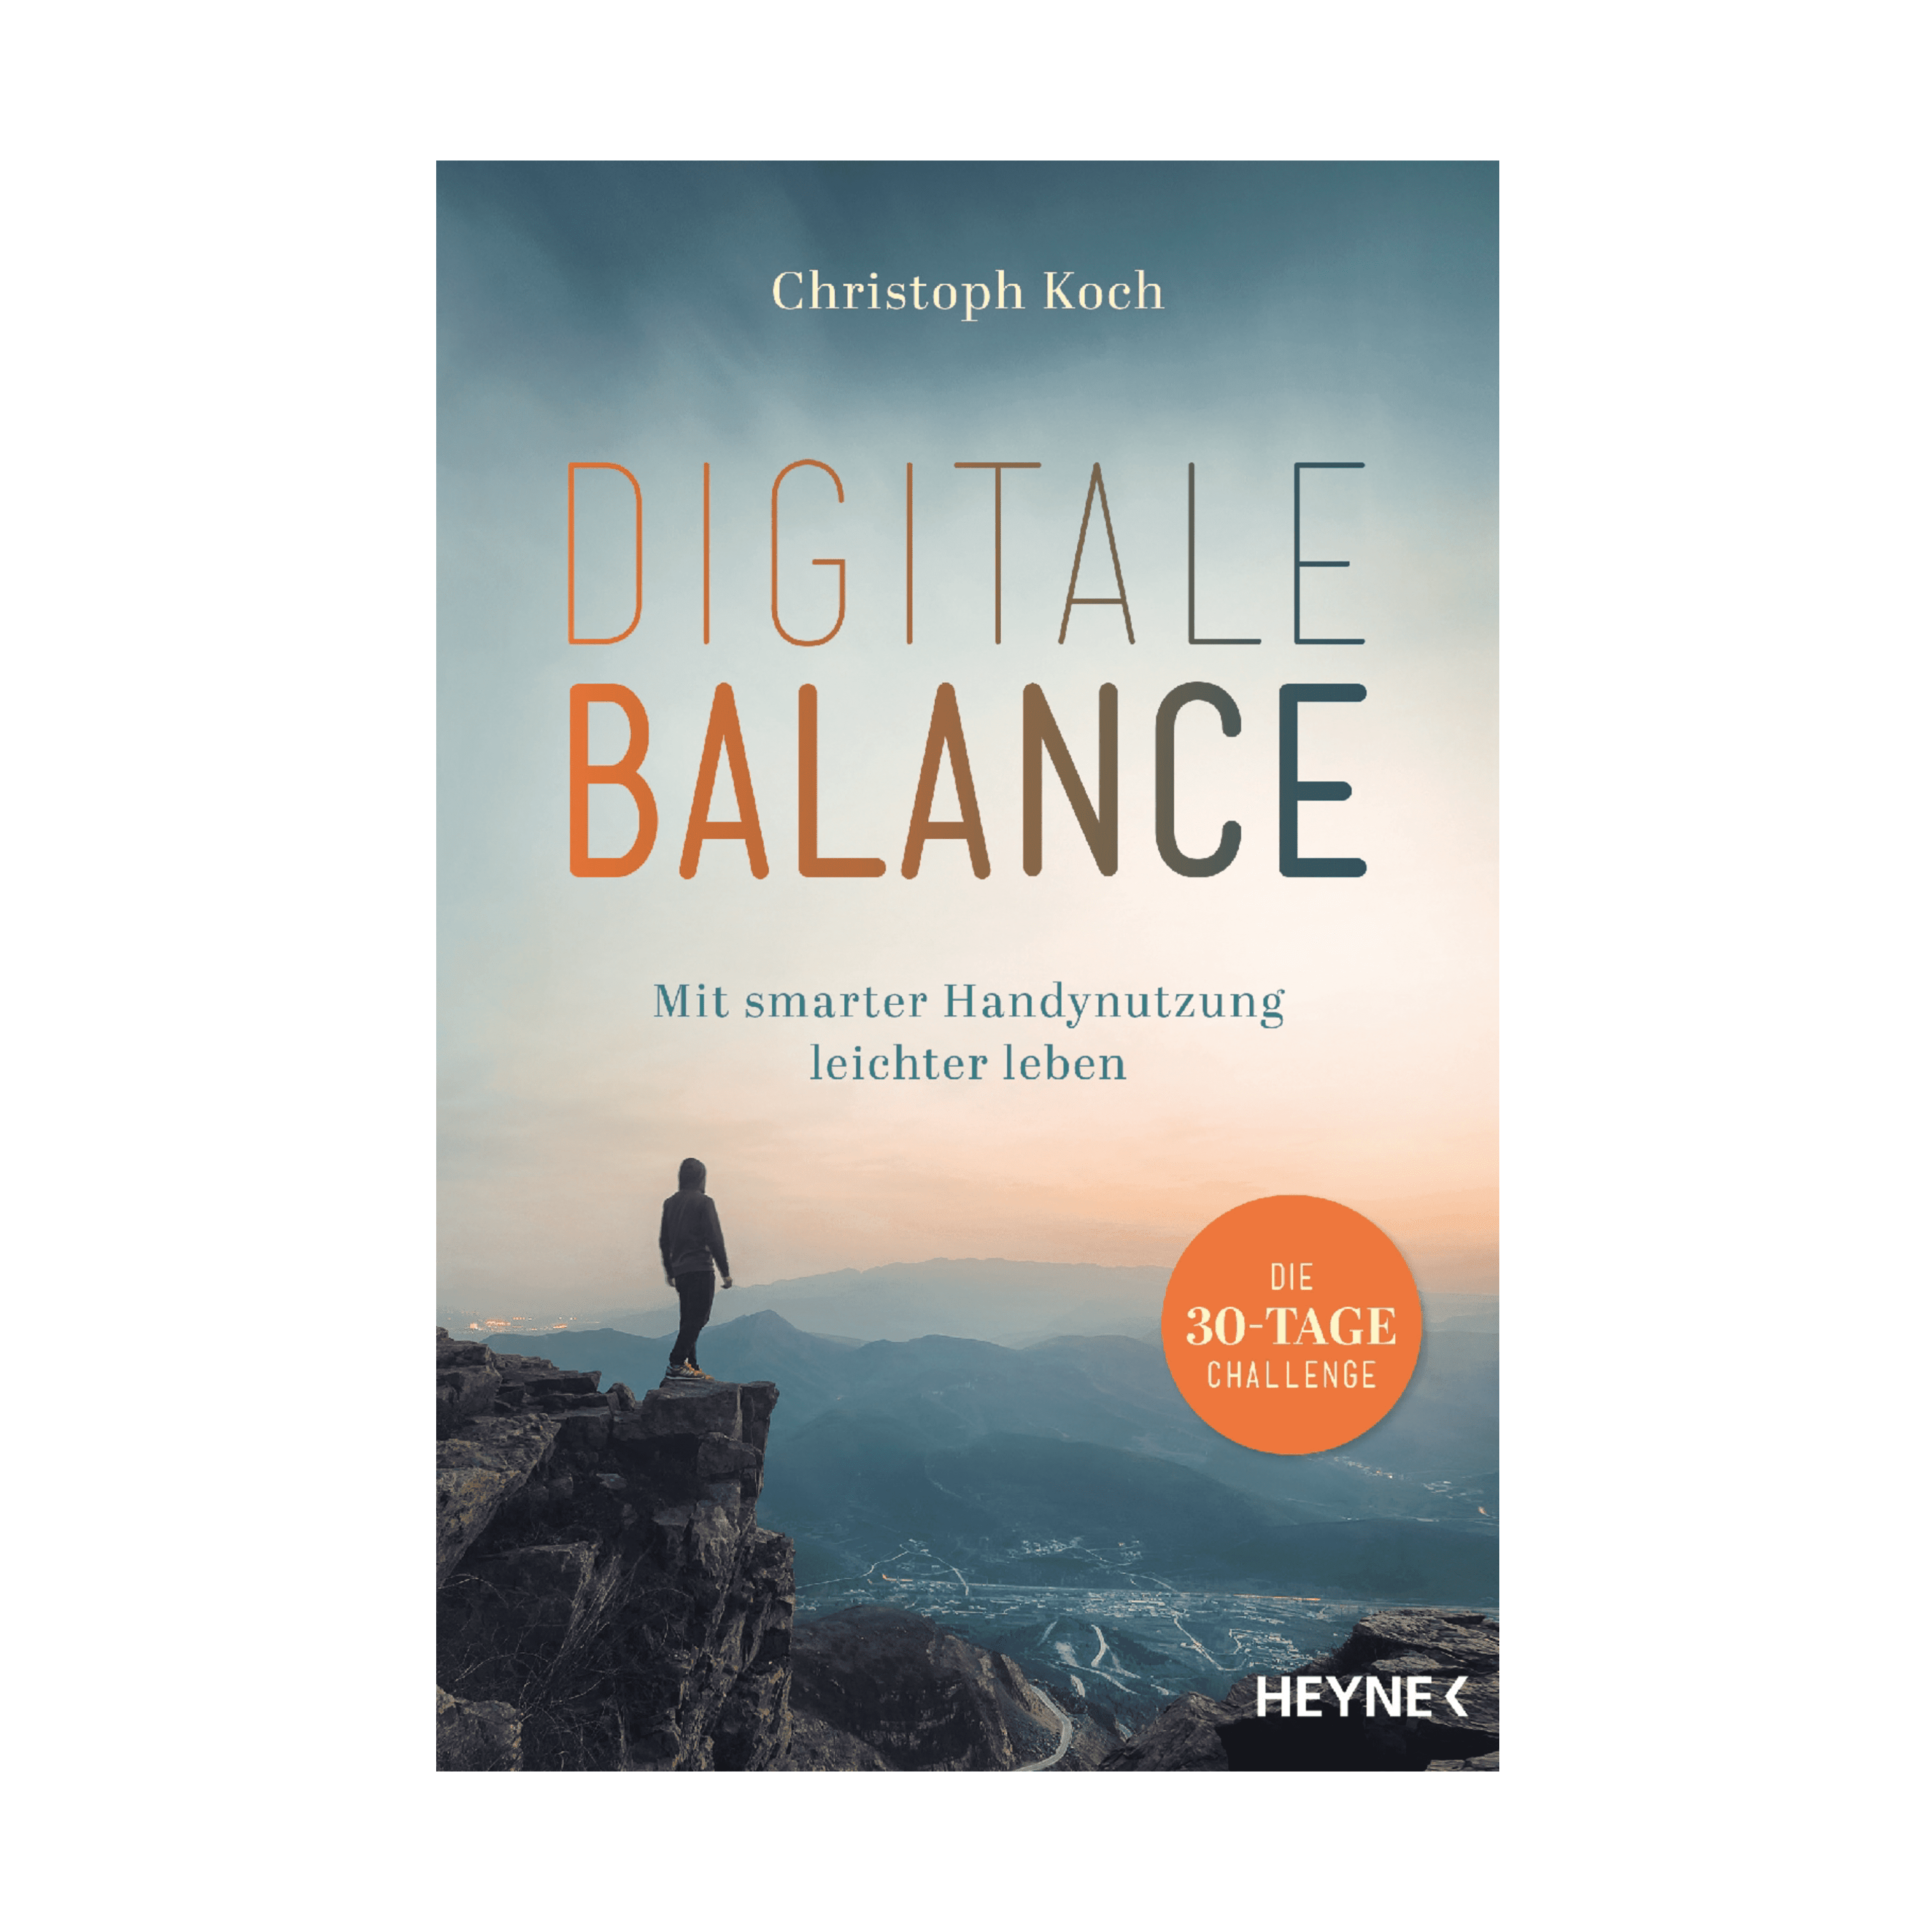 Libro llamado Balance digital